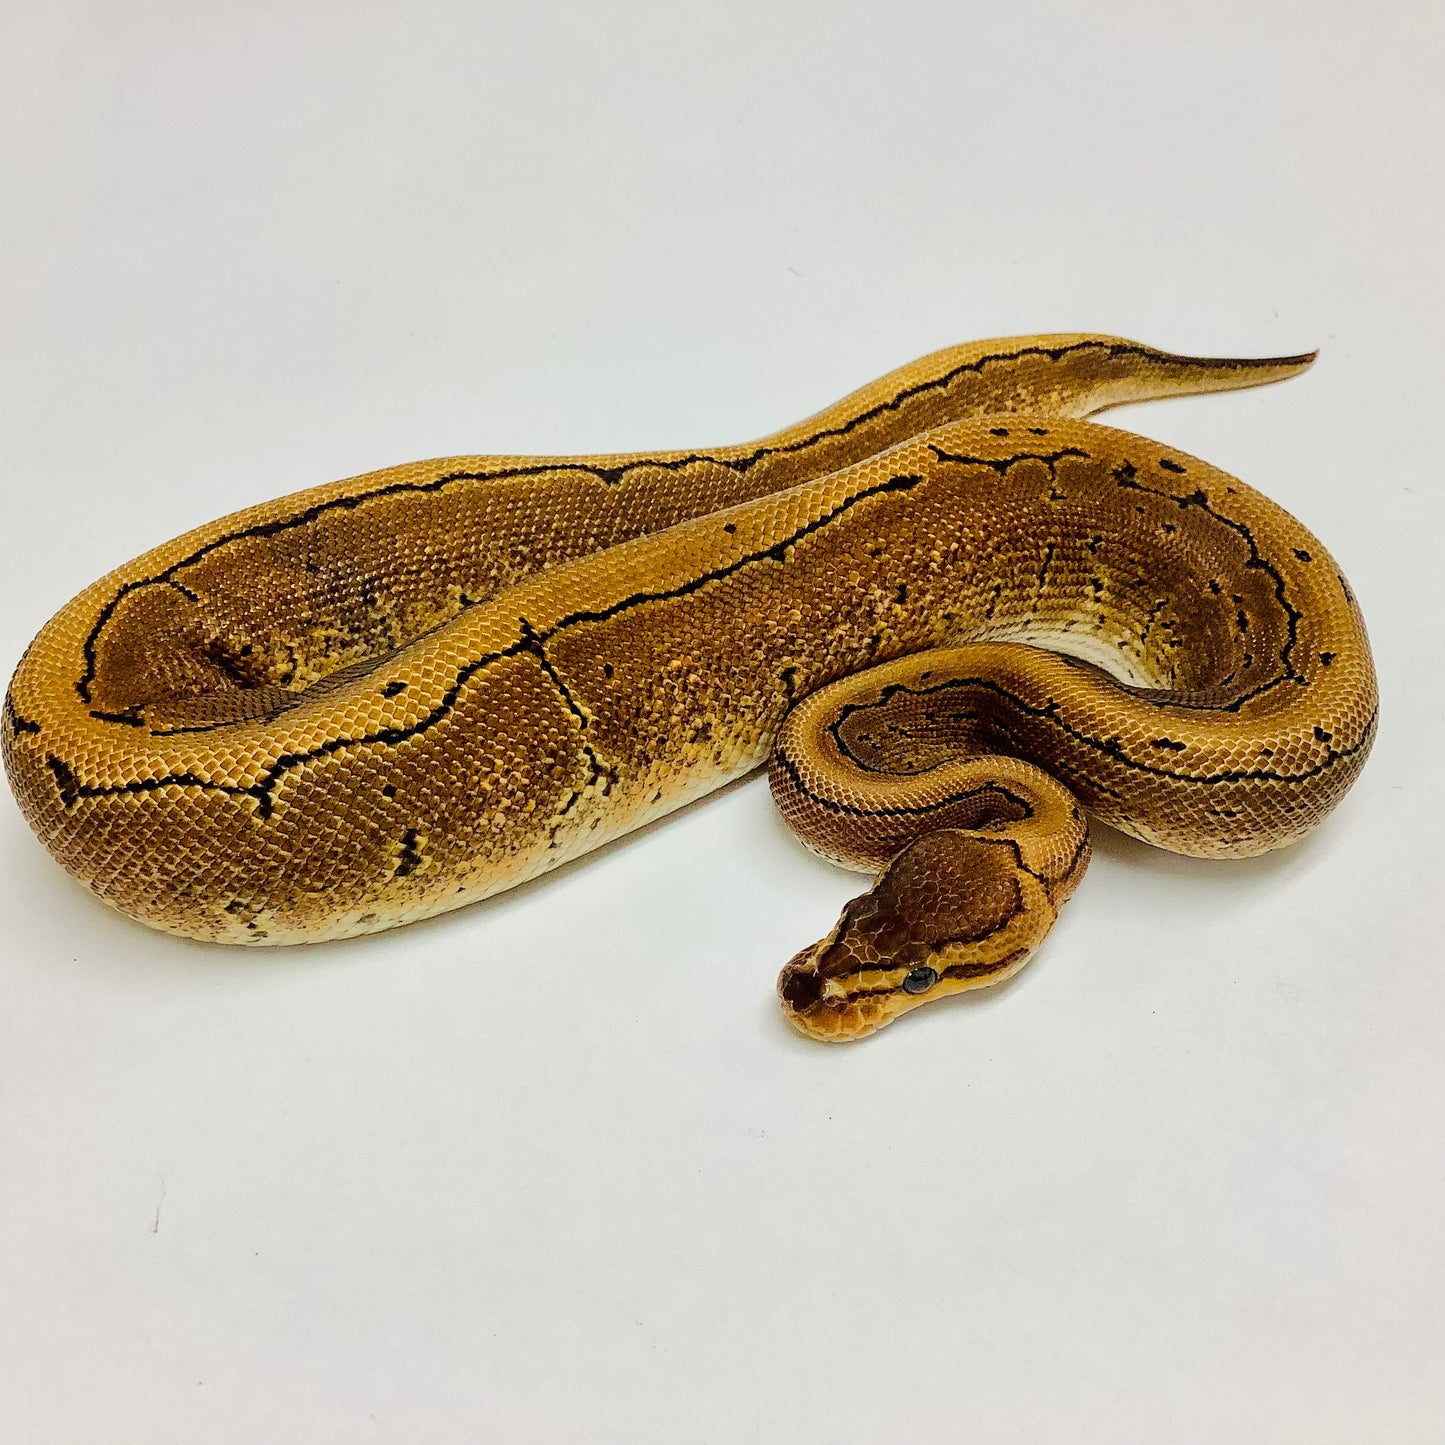 Calico Pinstripe Ball Python- Female #2022F01